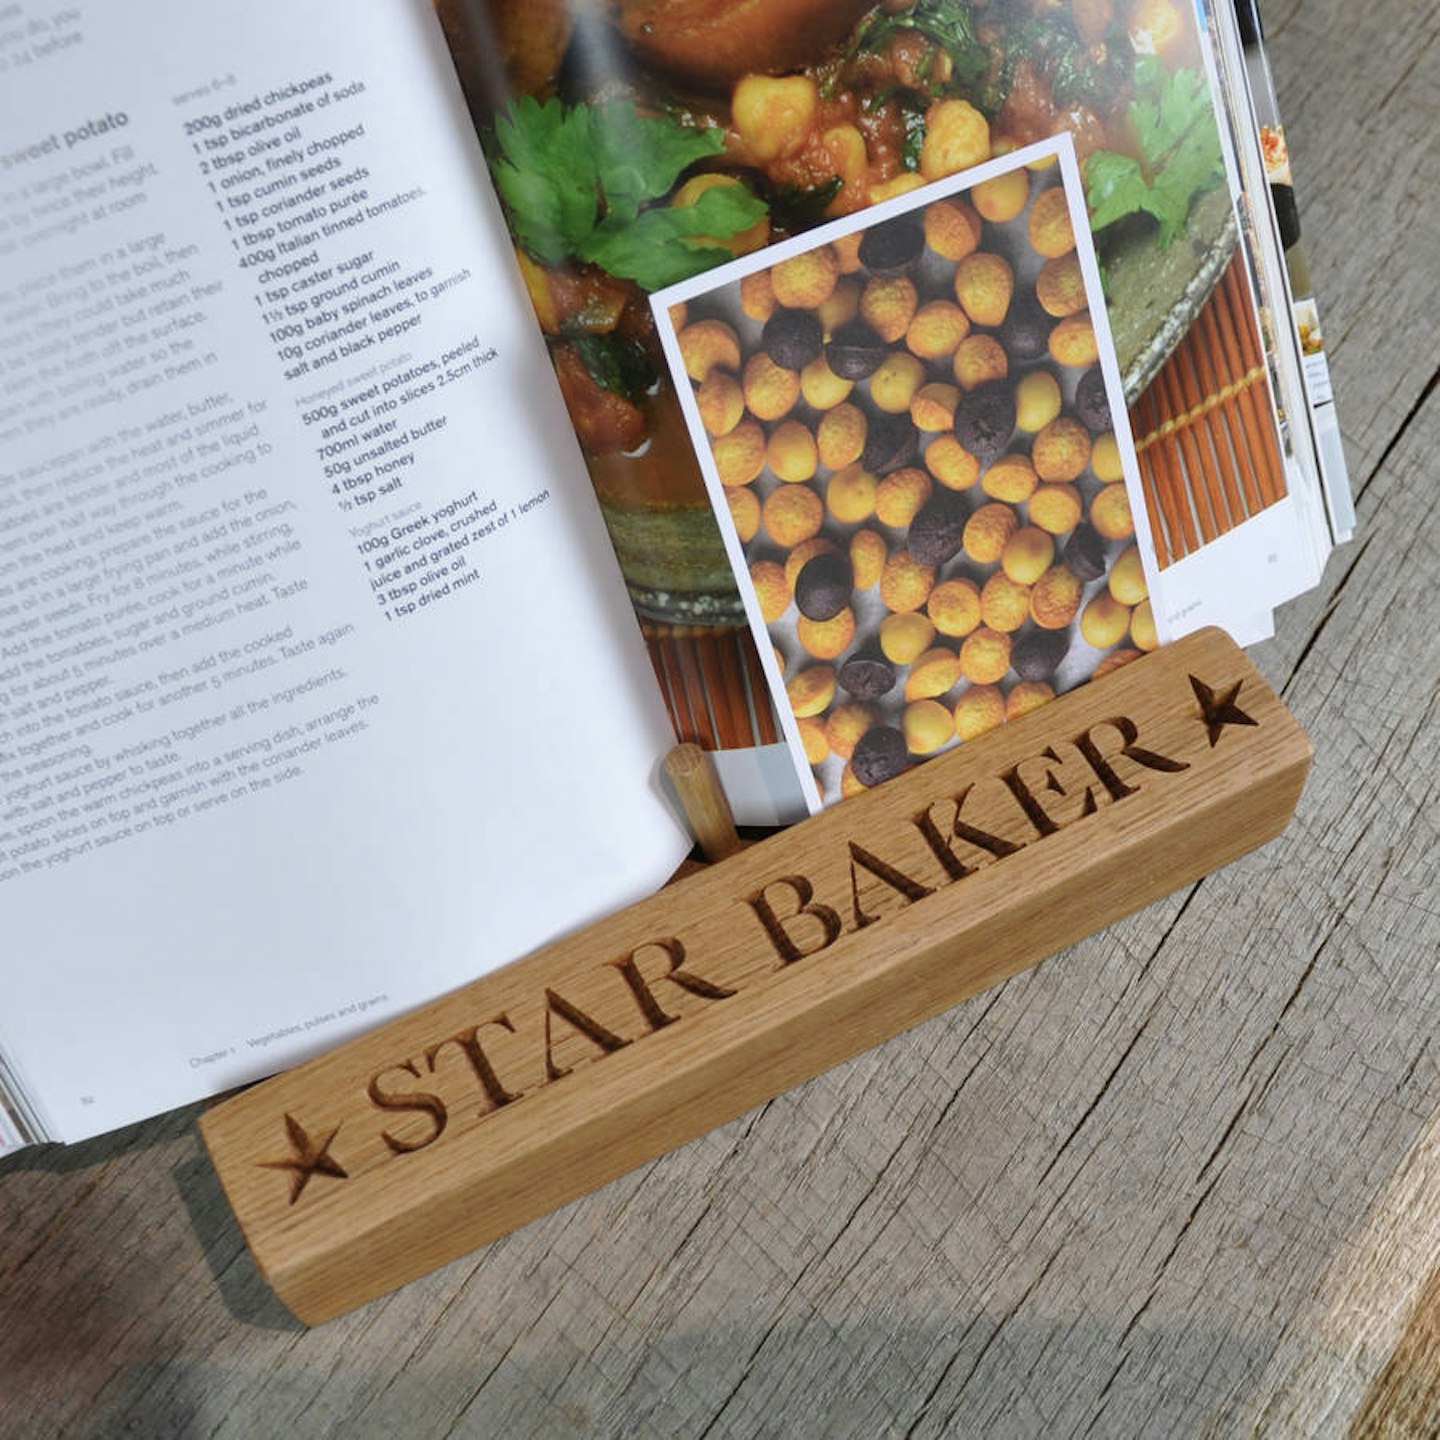 Star Baker Cook Book Stand